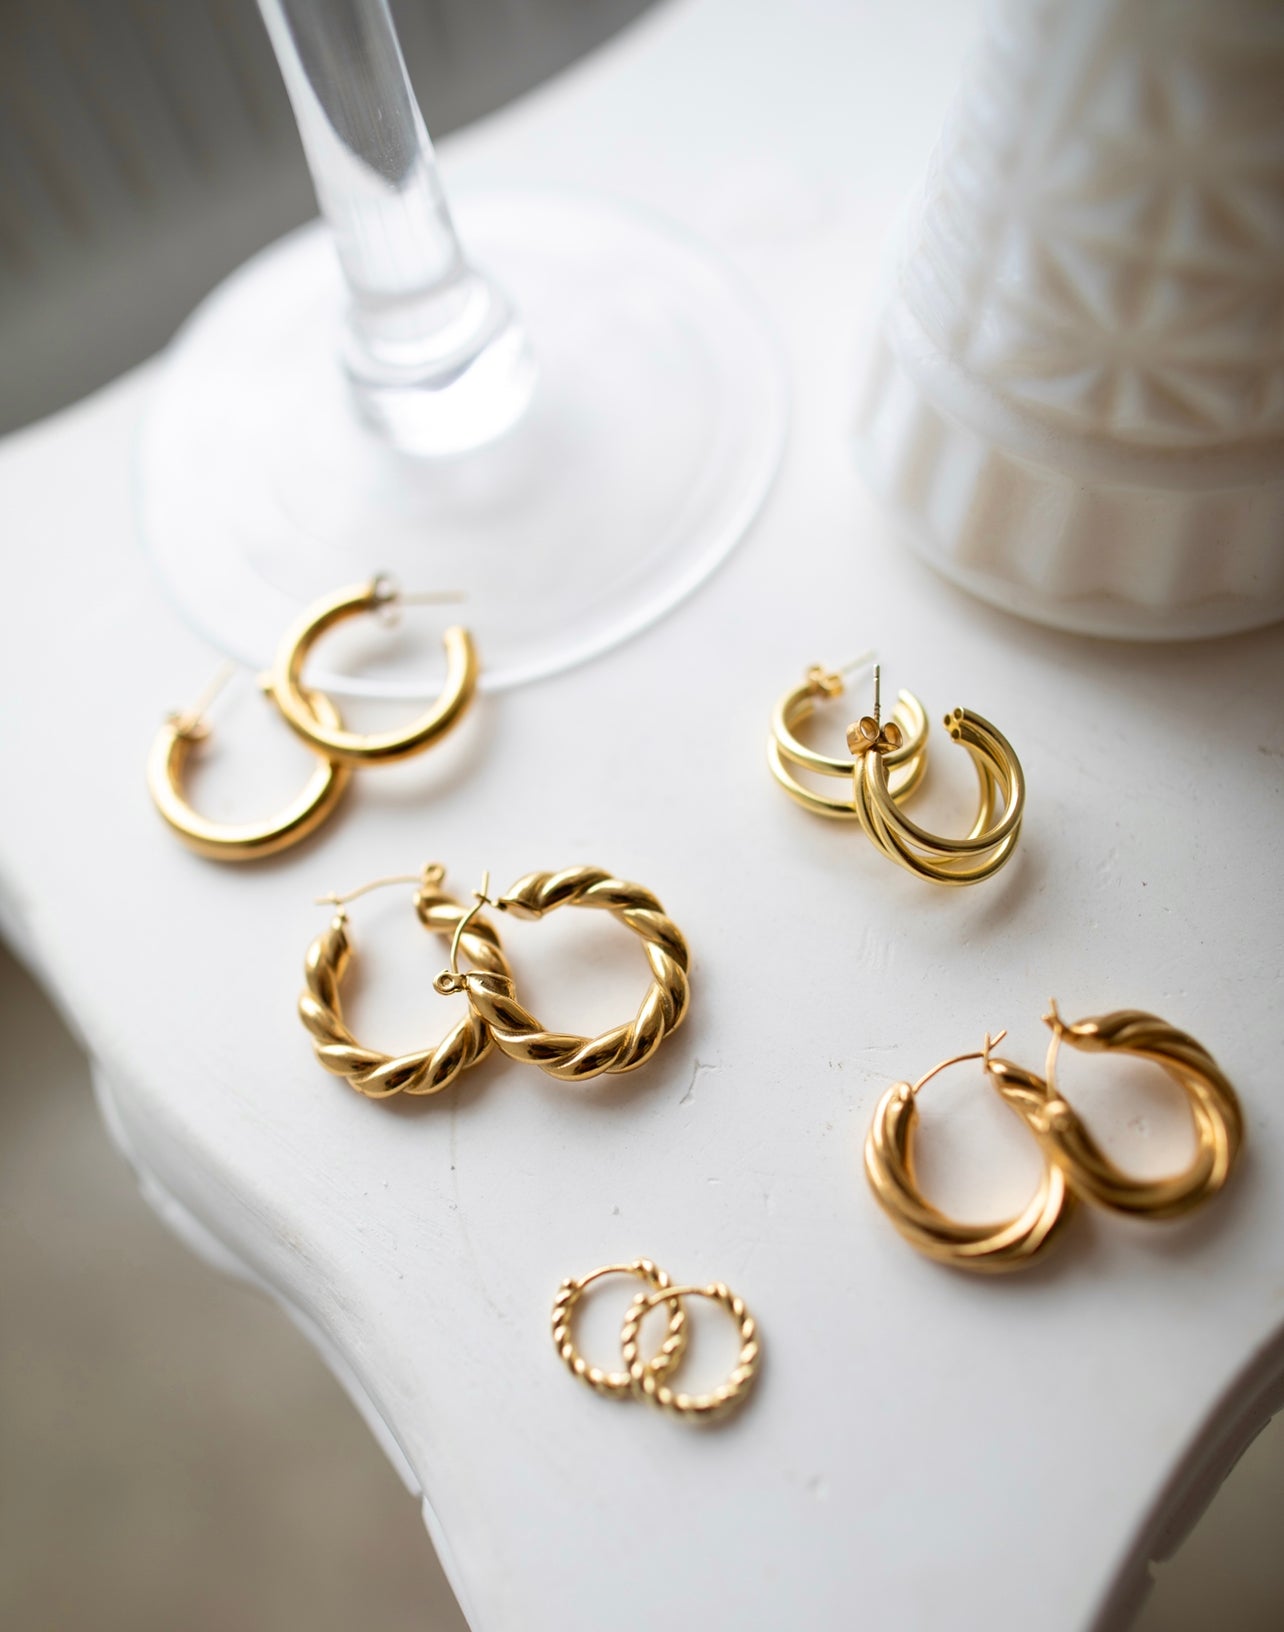 "Carmela” earrings